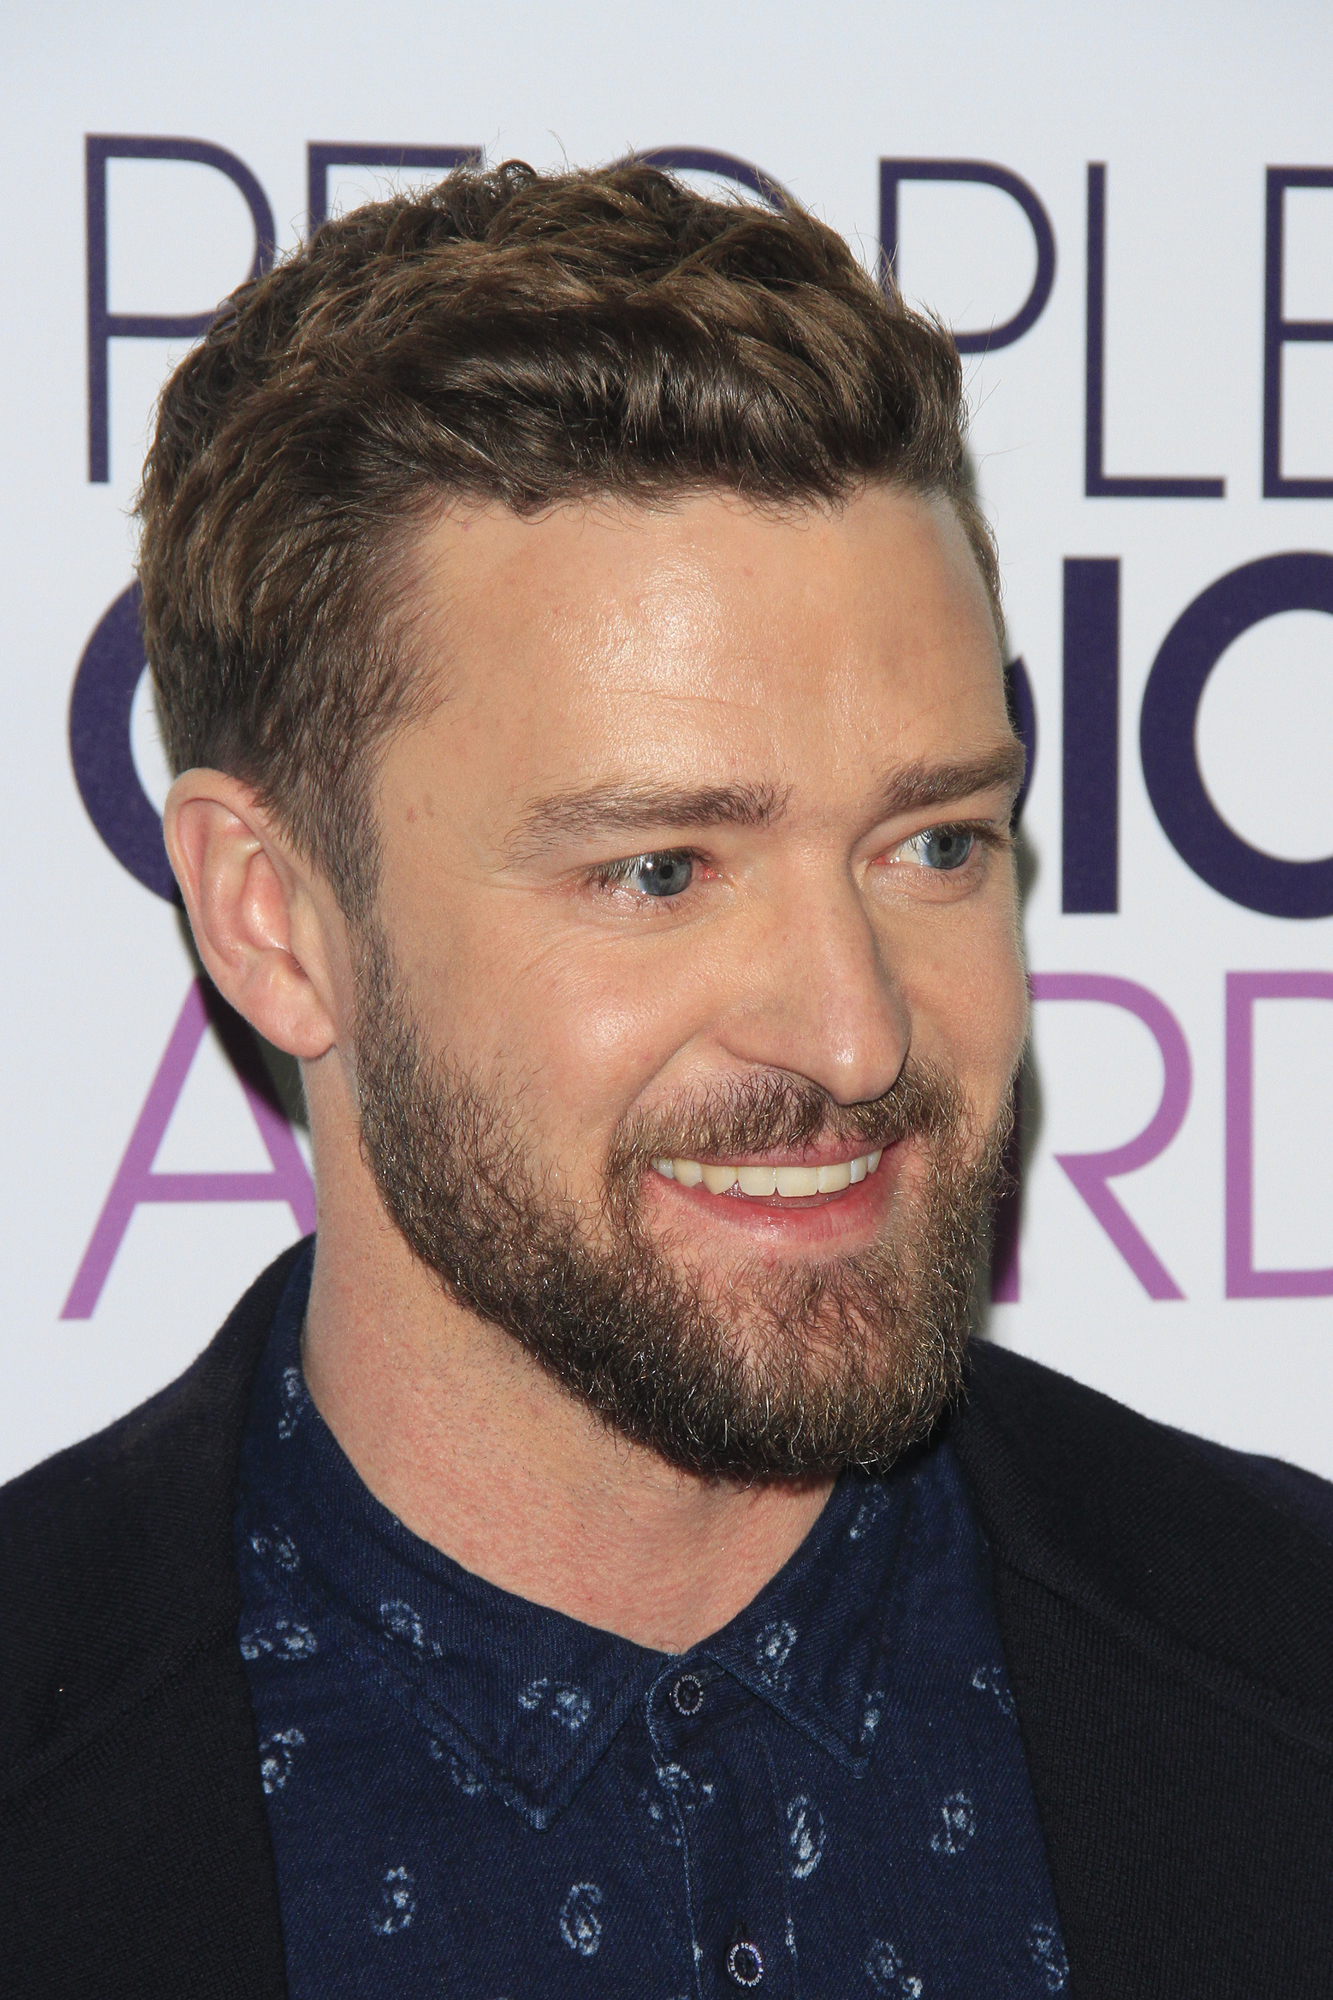 Justin Timberlake To Headline The 2018 Super Bowl Halftime Show